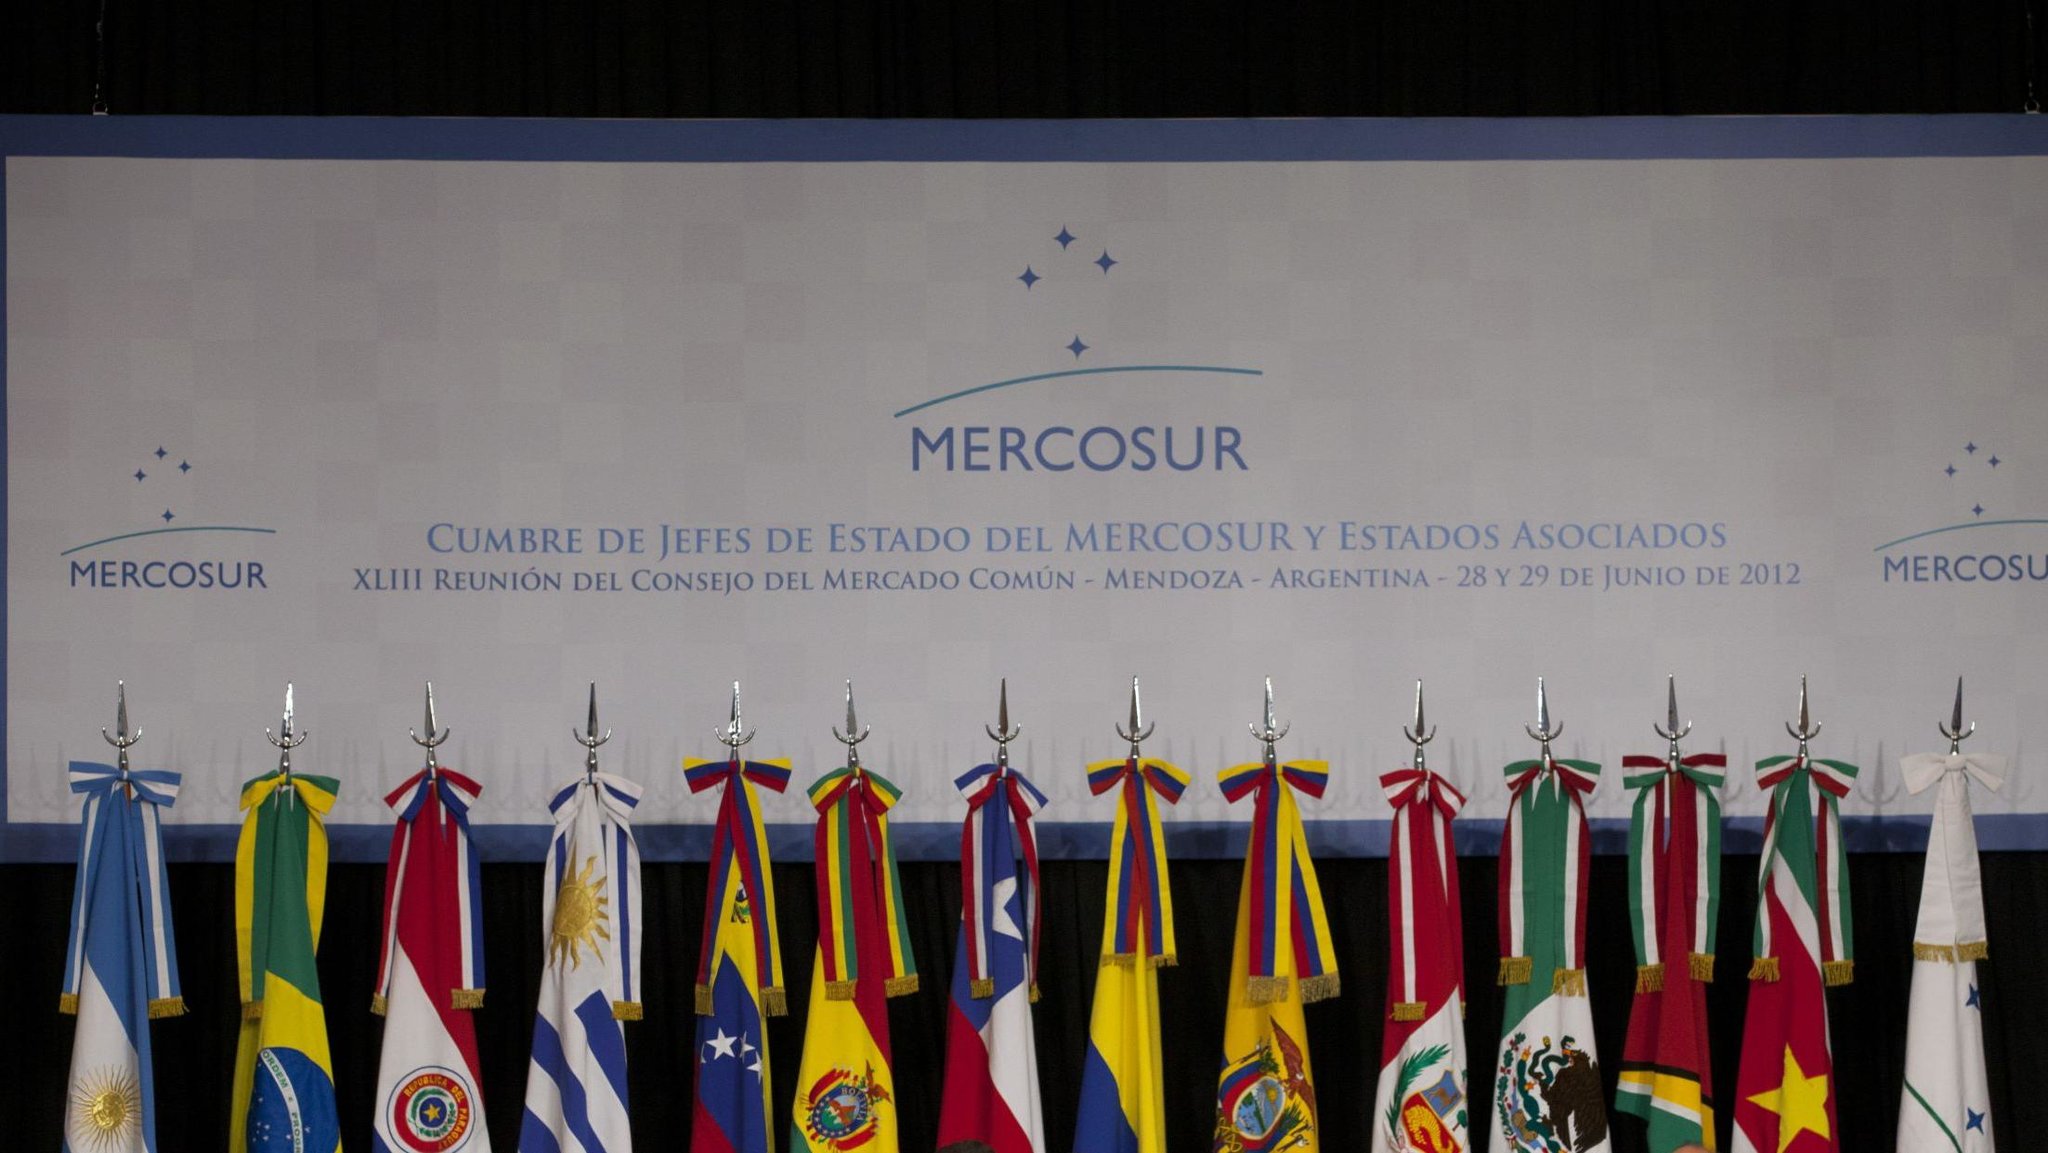 Флаги стран Меркосур, автор: Cancillería Ecuador [dgcomsoc], лицензия: CC BY SA 2.0